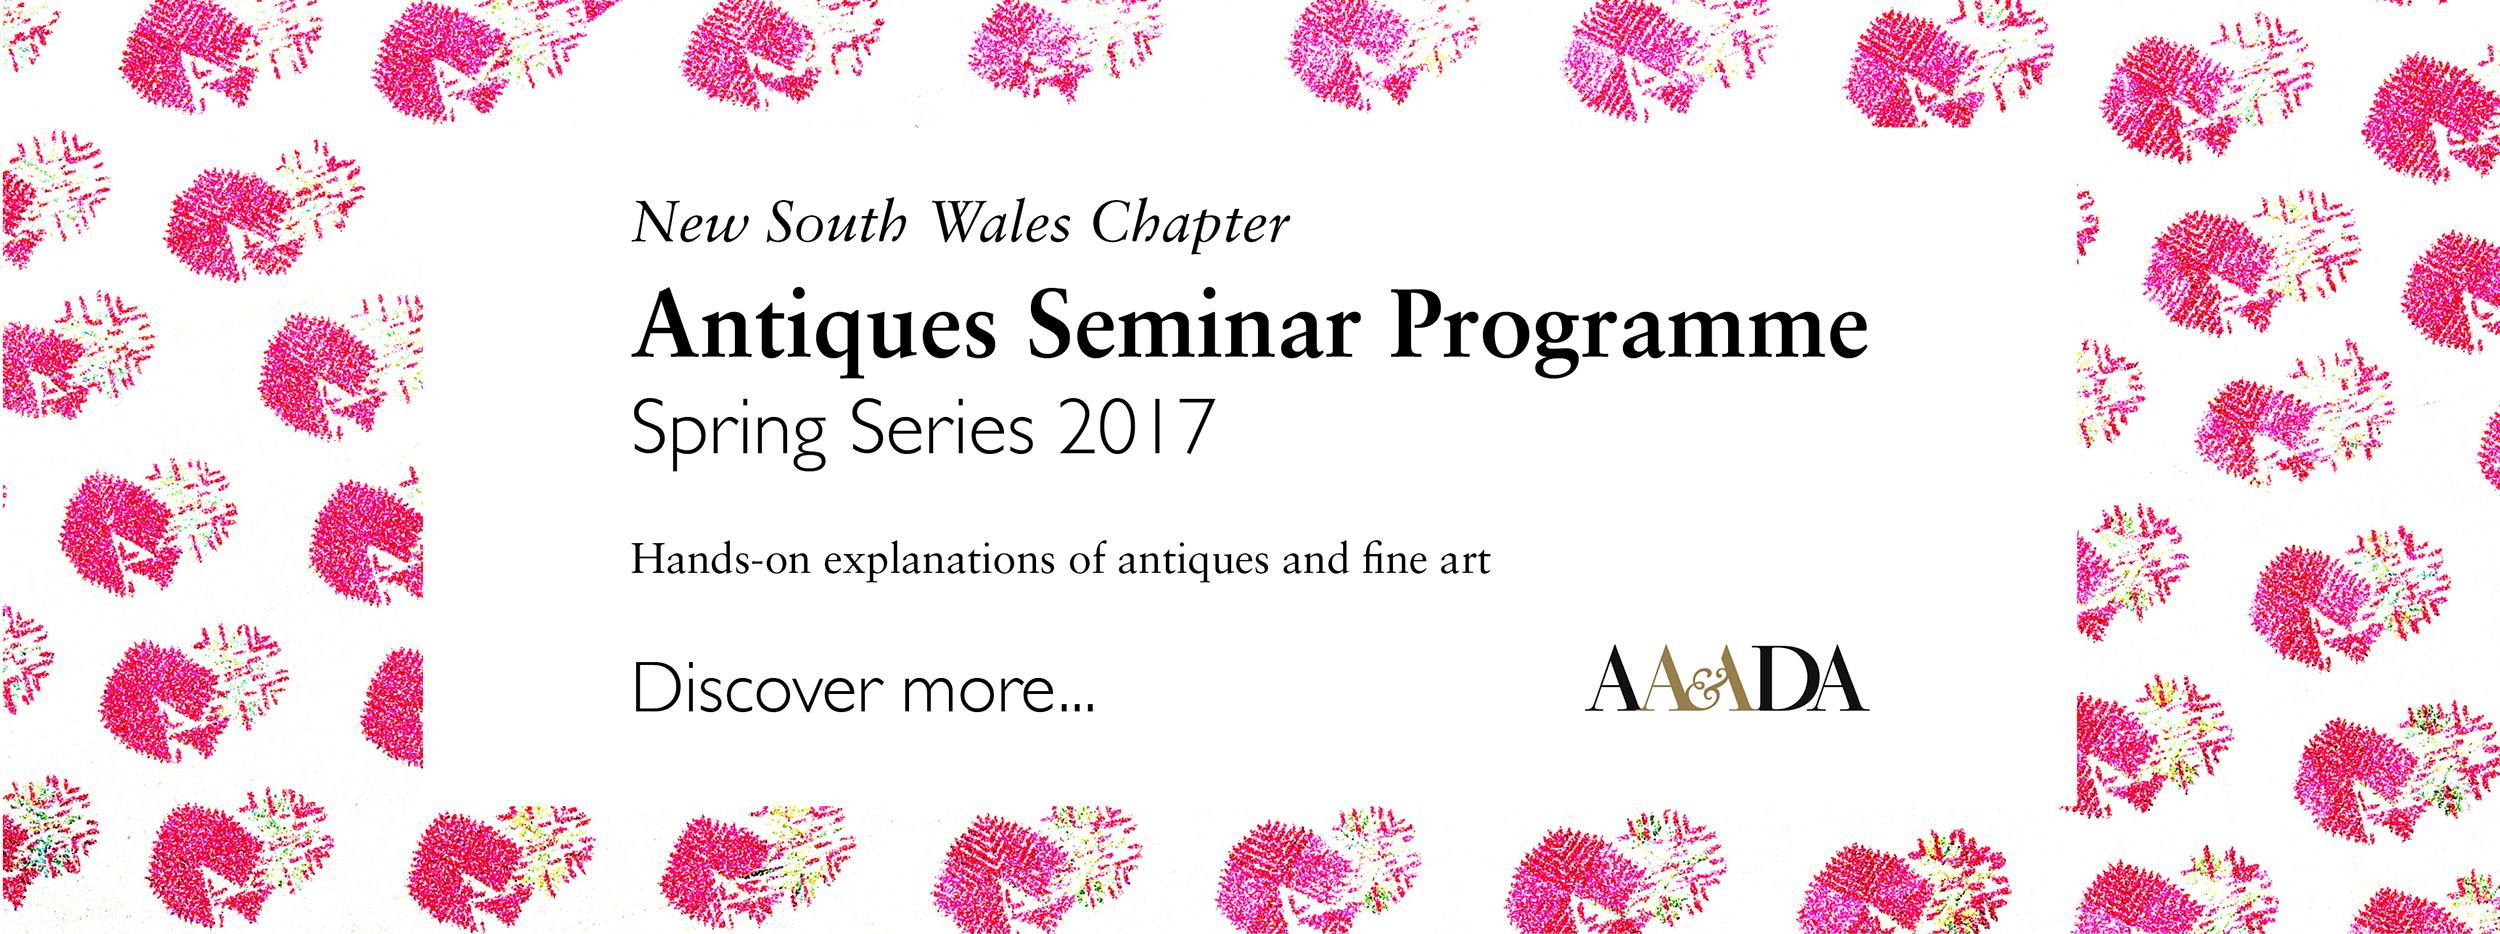 Spring Series Talks & Lectures: Antiques Seminar